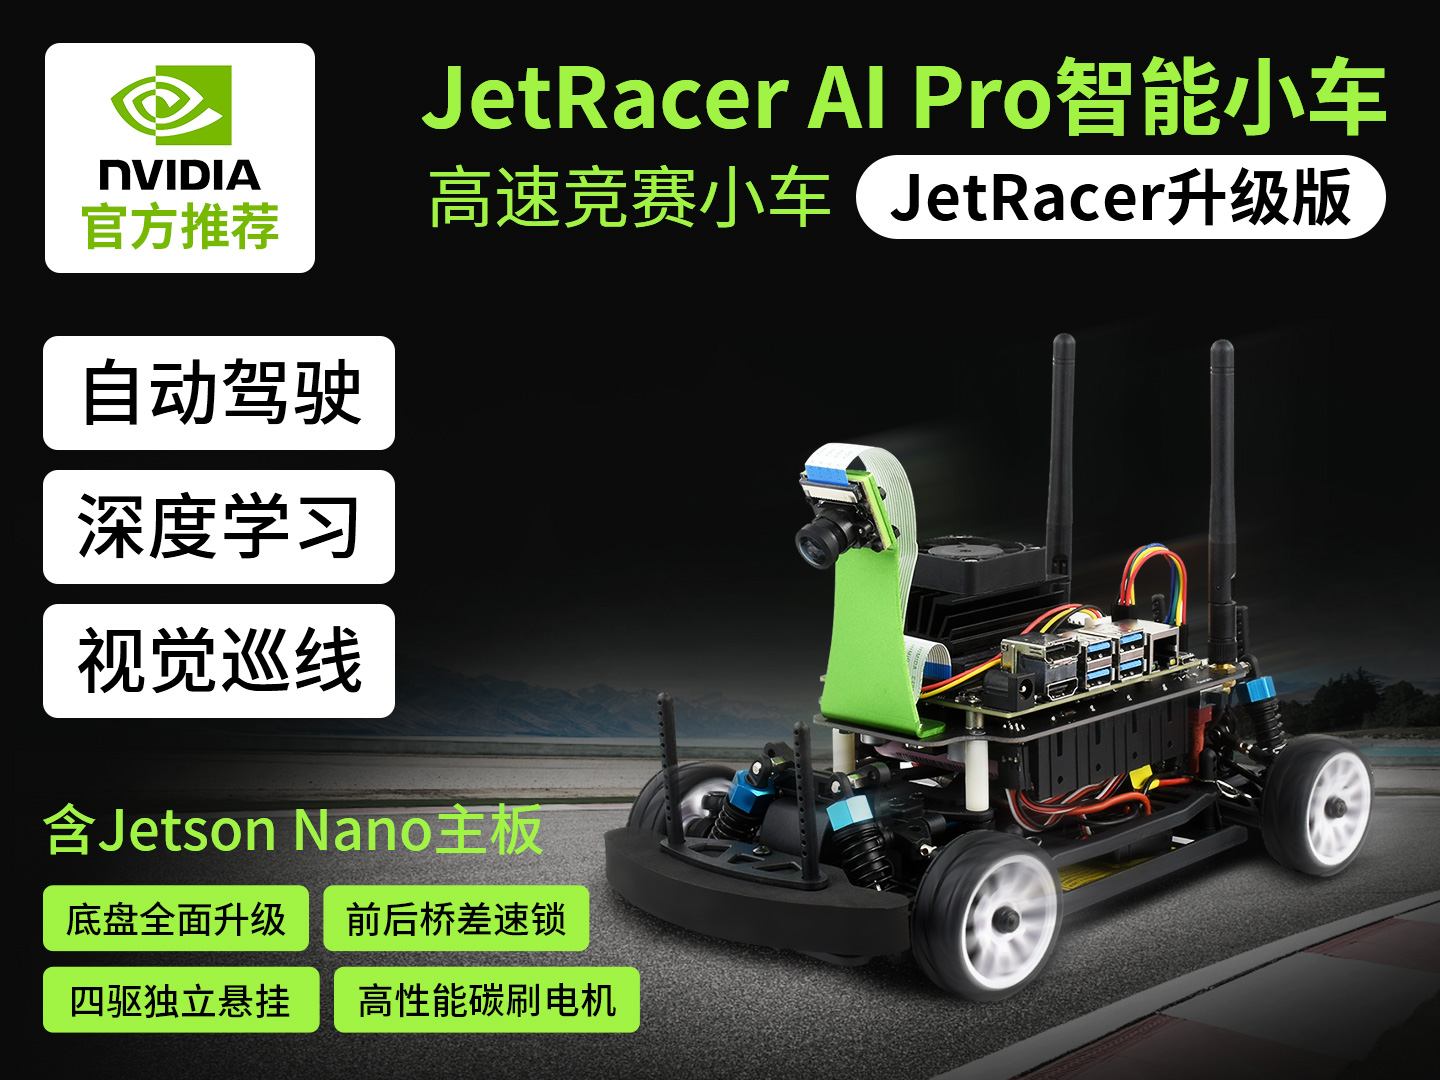 JetRacer Pro人工智能小车AI赛车机器人 高速竞赛赛车 自动驾驶 深度学习 套餐B(含微雪Jetson Nano套件)